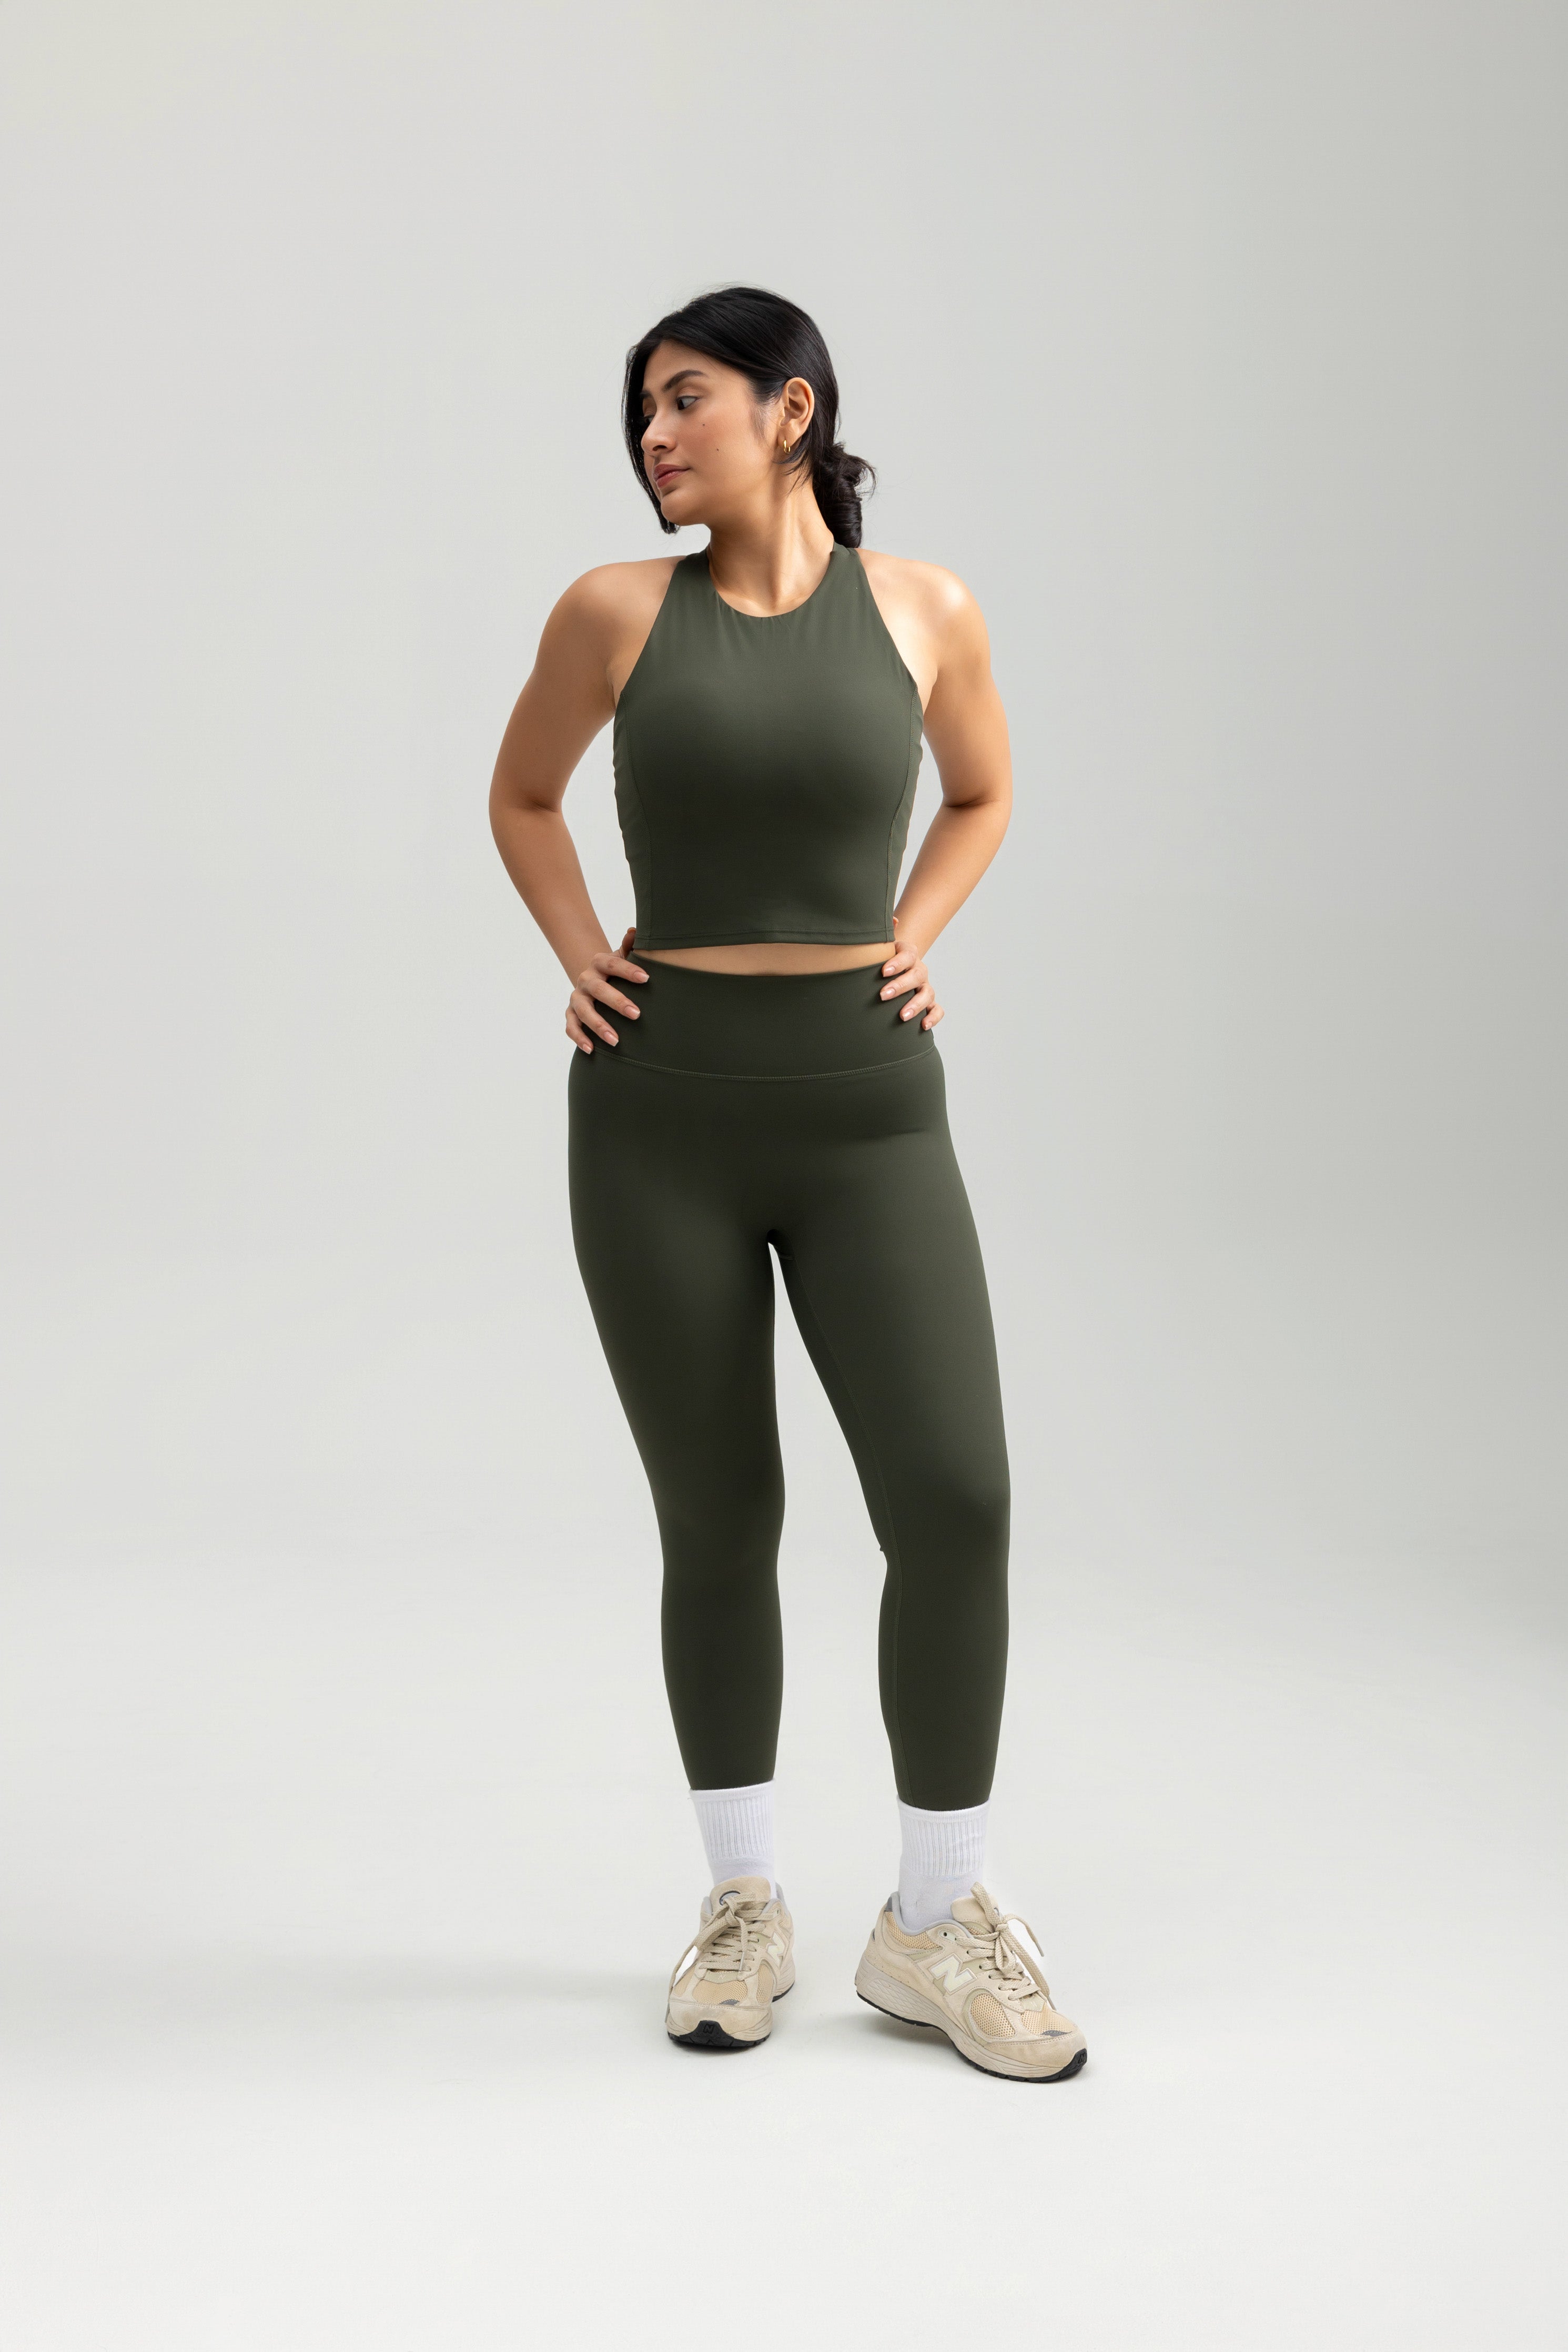 Shop Women's Activewear & Gym Wear Online For Asian Women: Anya Active